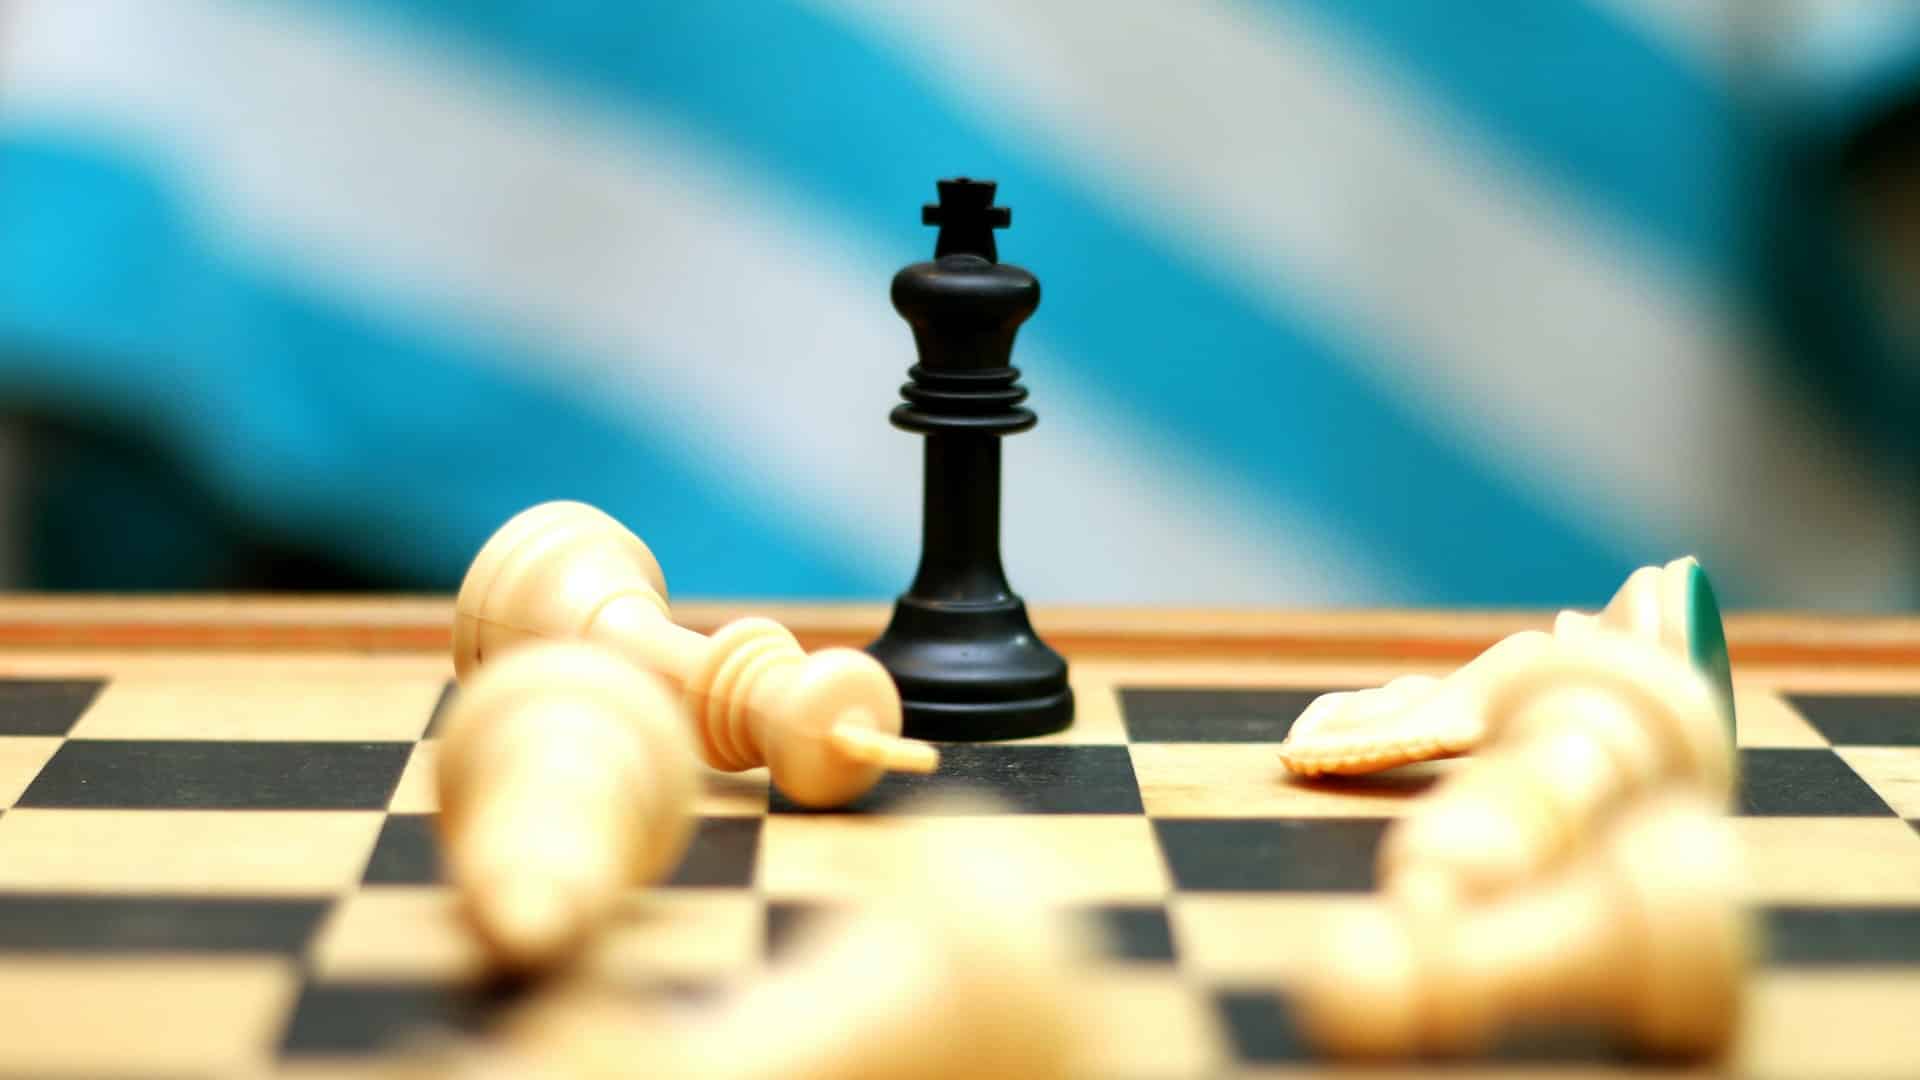 Karnataka chess hit after ban on online gaming: KSCA